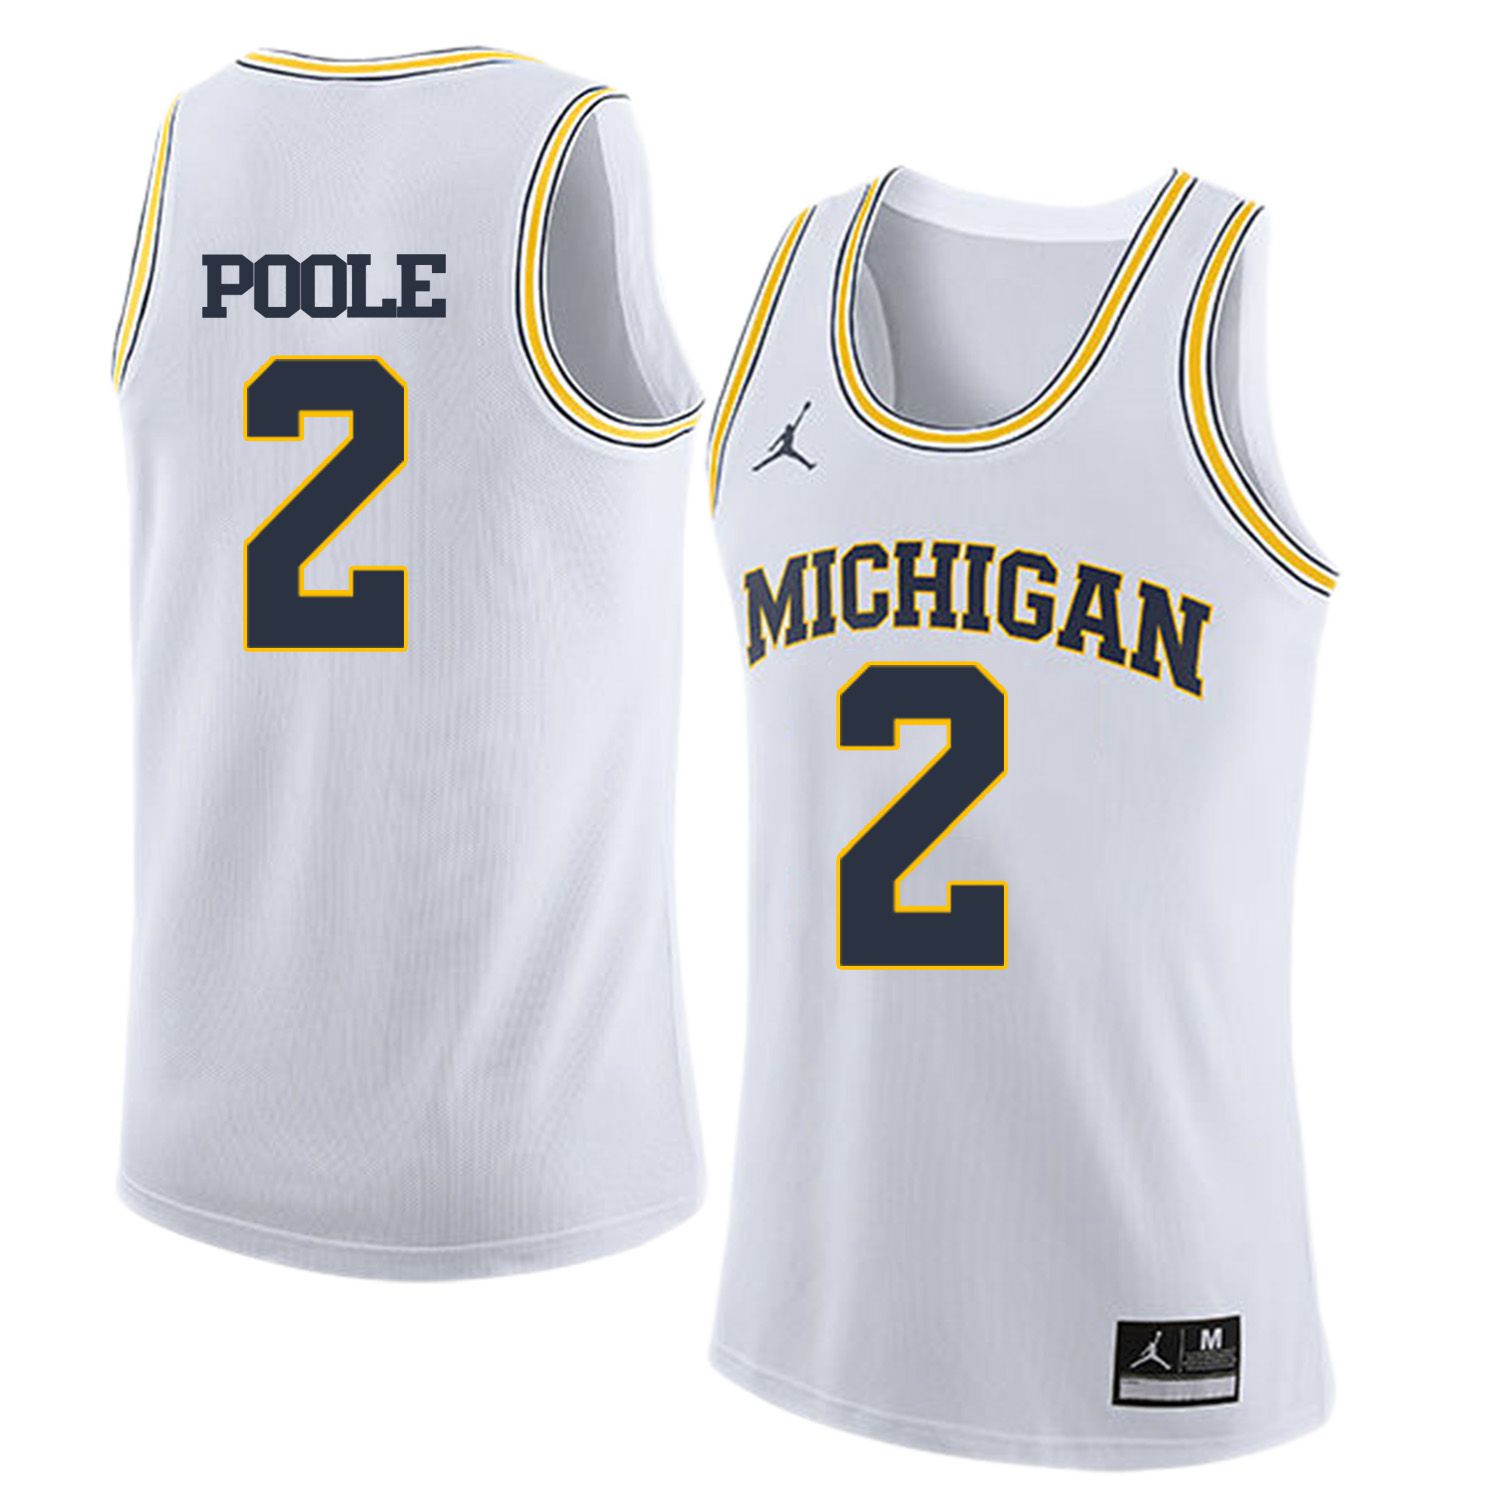 Men Jordan University of Michigan Basketball White 2 Poole Customized NCAA Jerseys